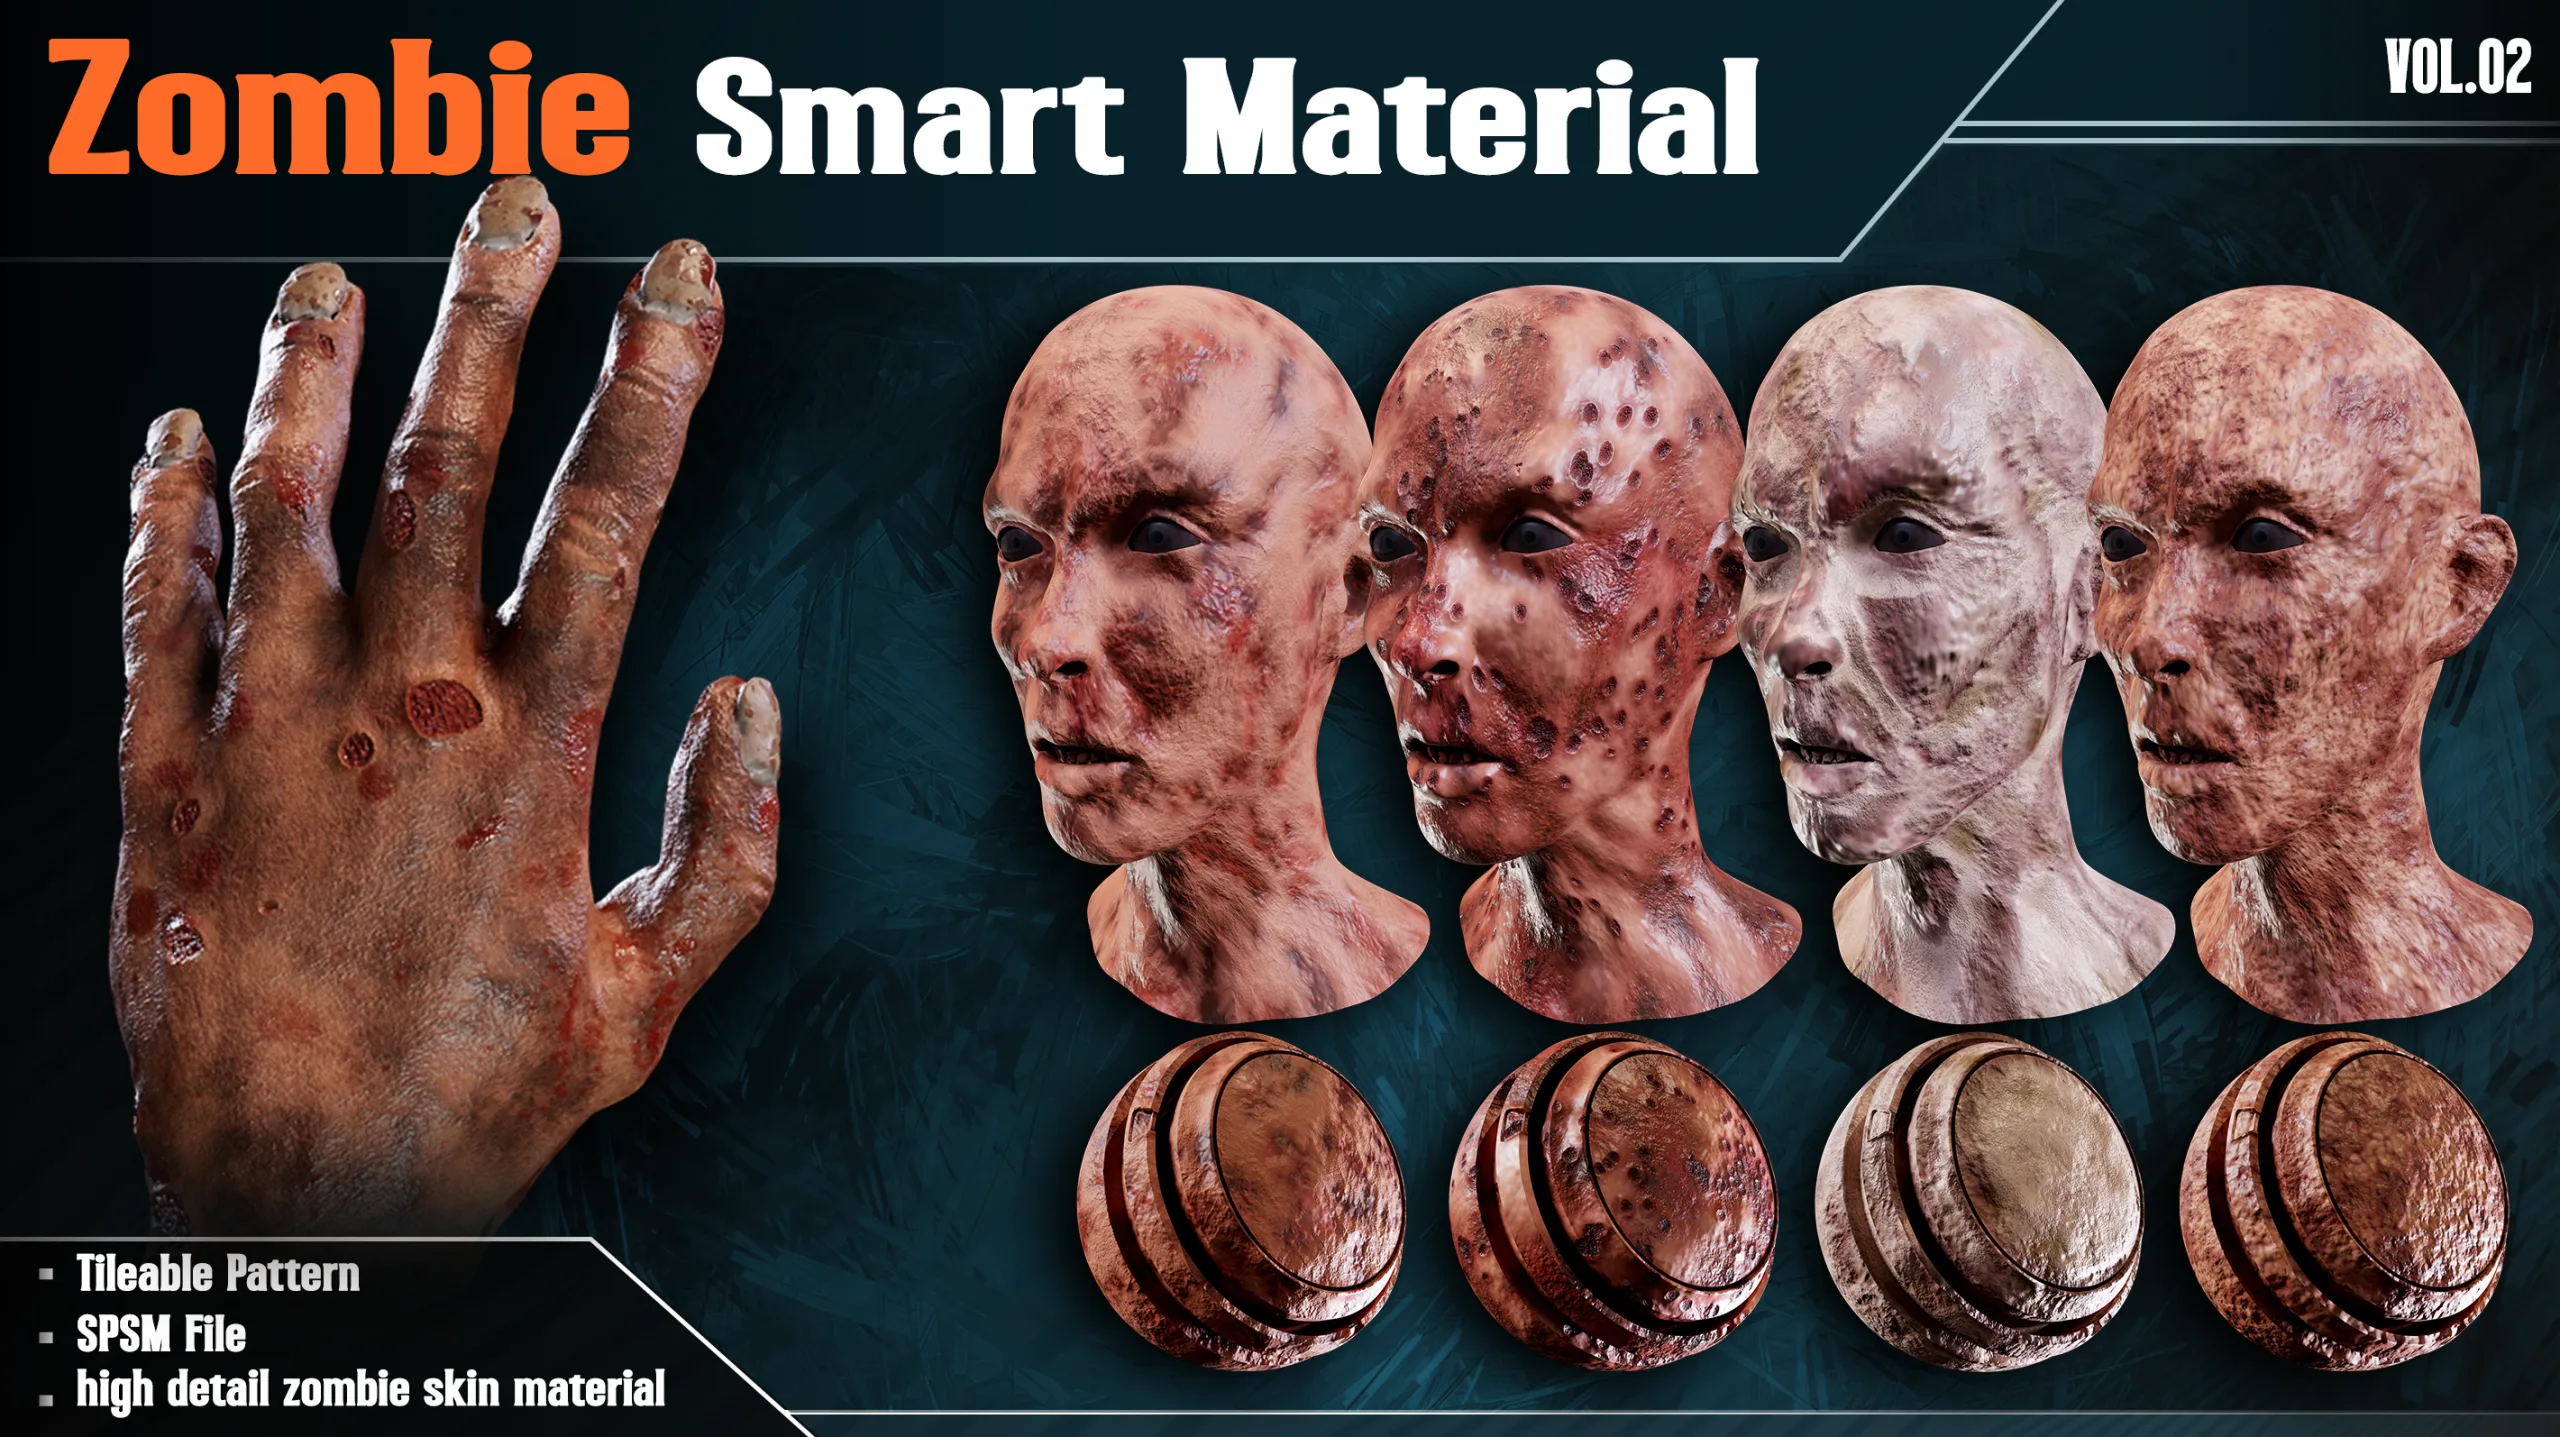 10 Zombie Smart Material - Vol.02